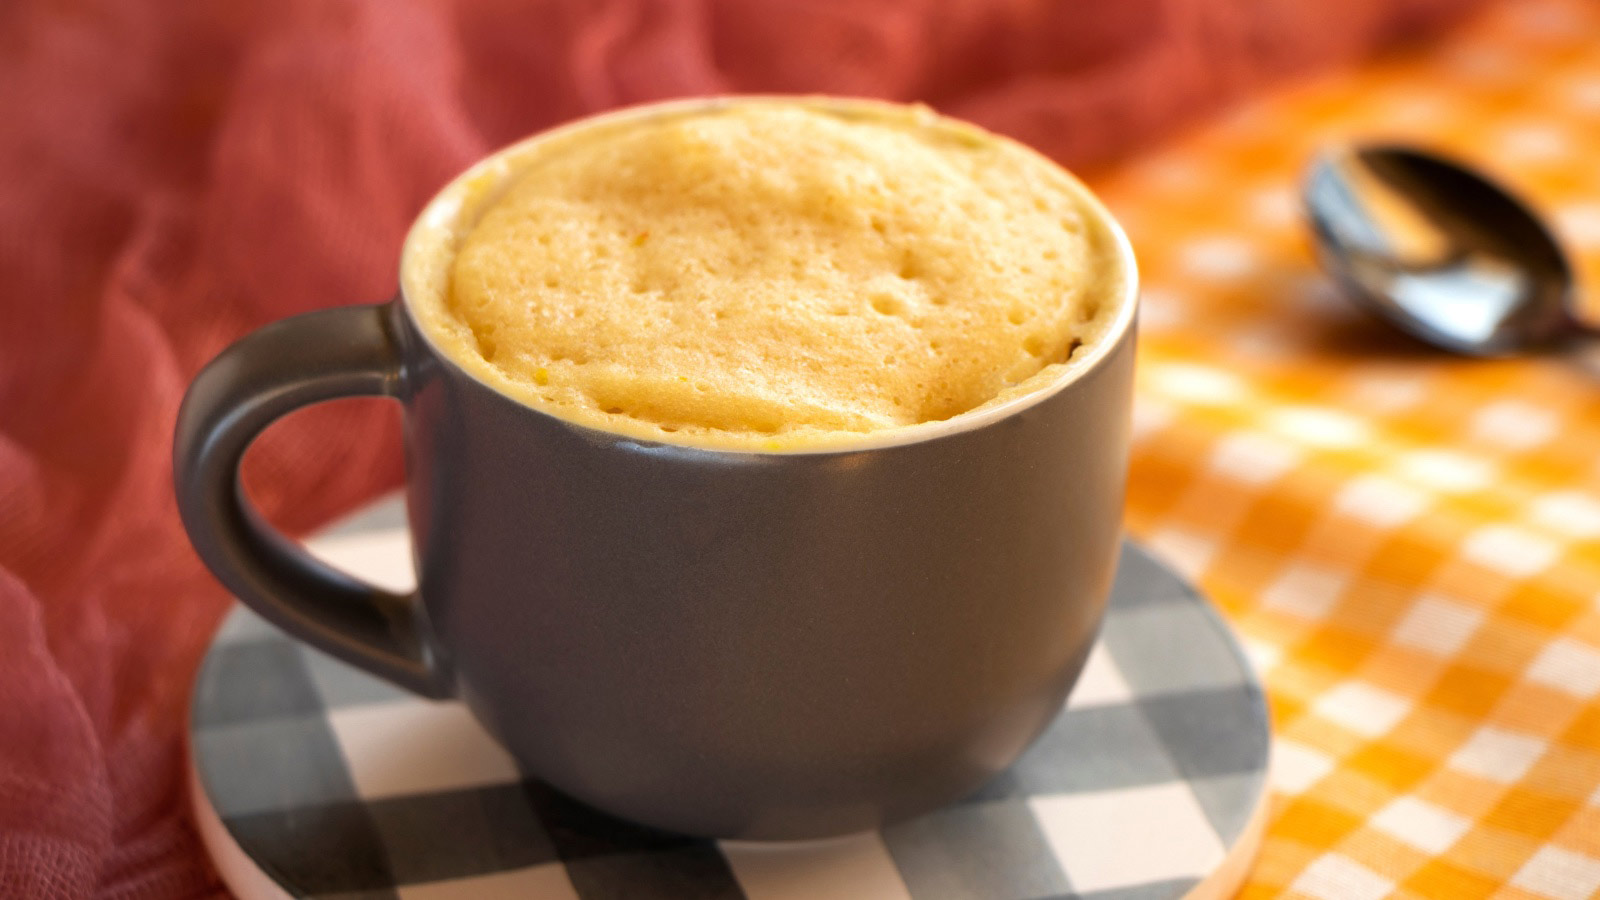 Microwave pancake in a mug.